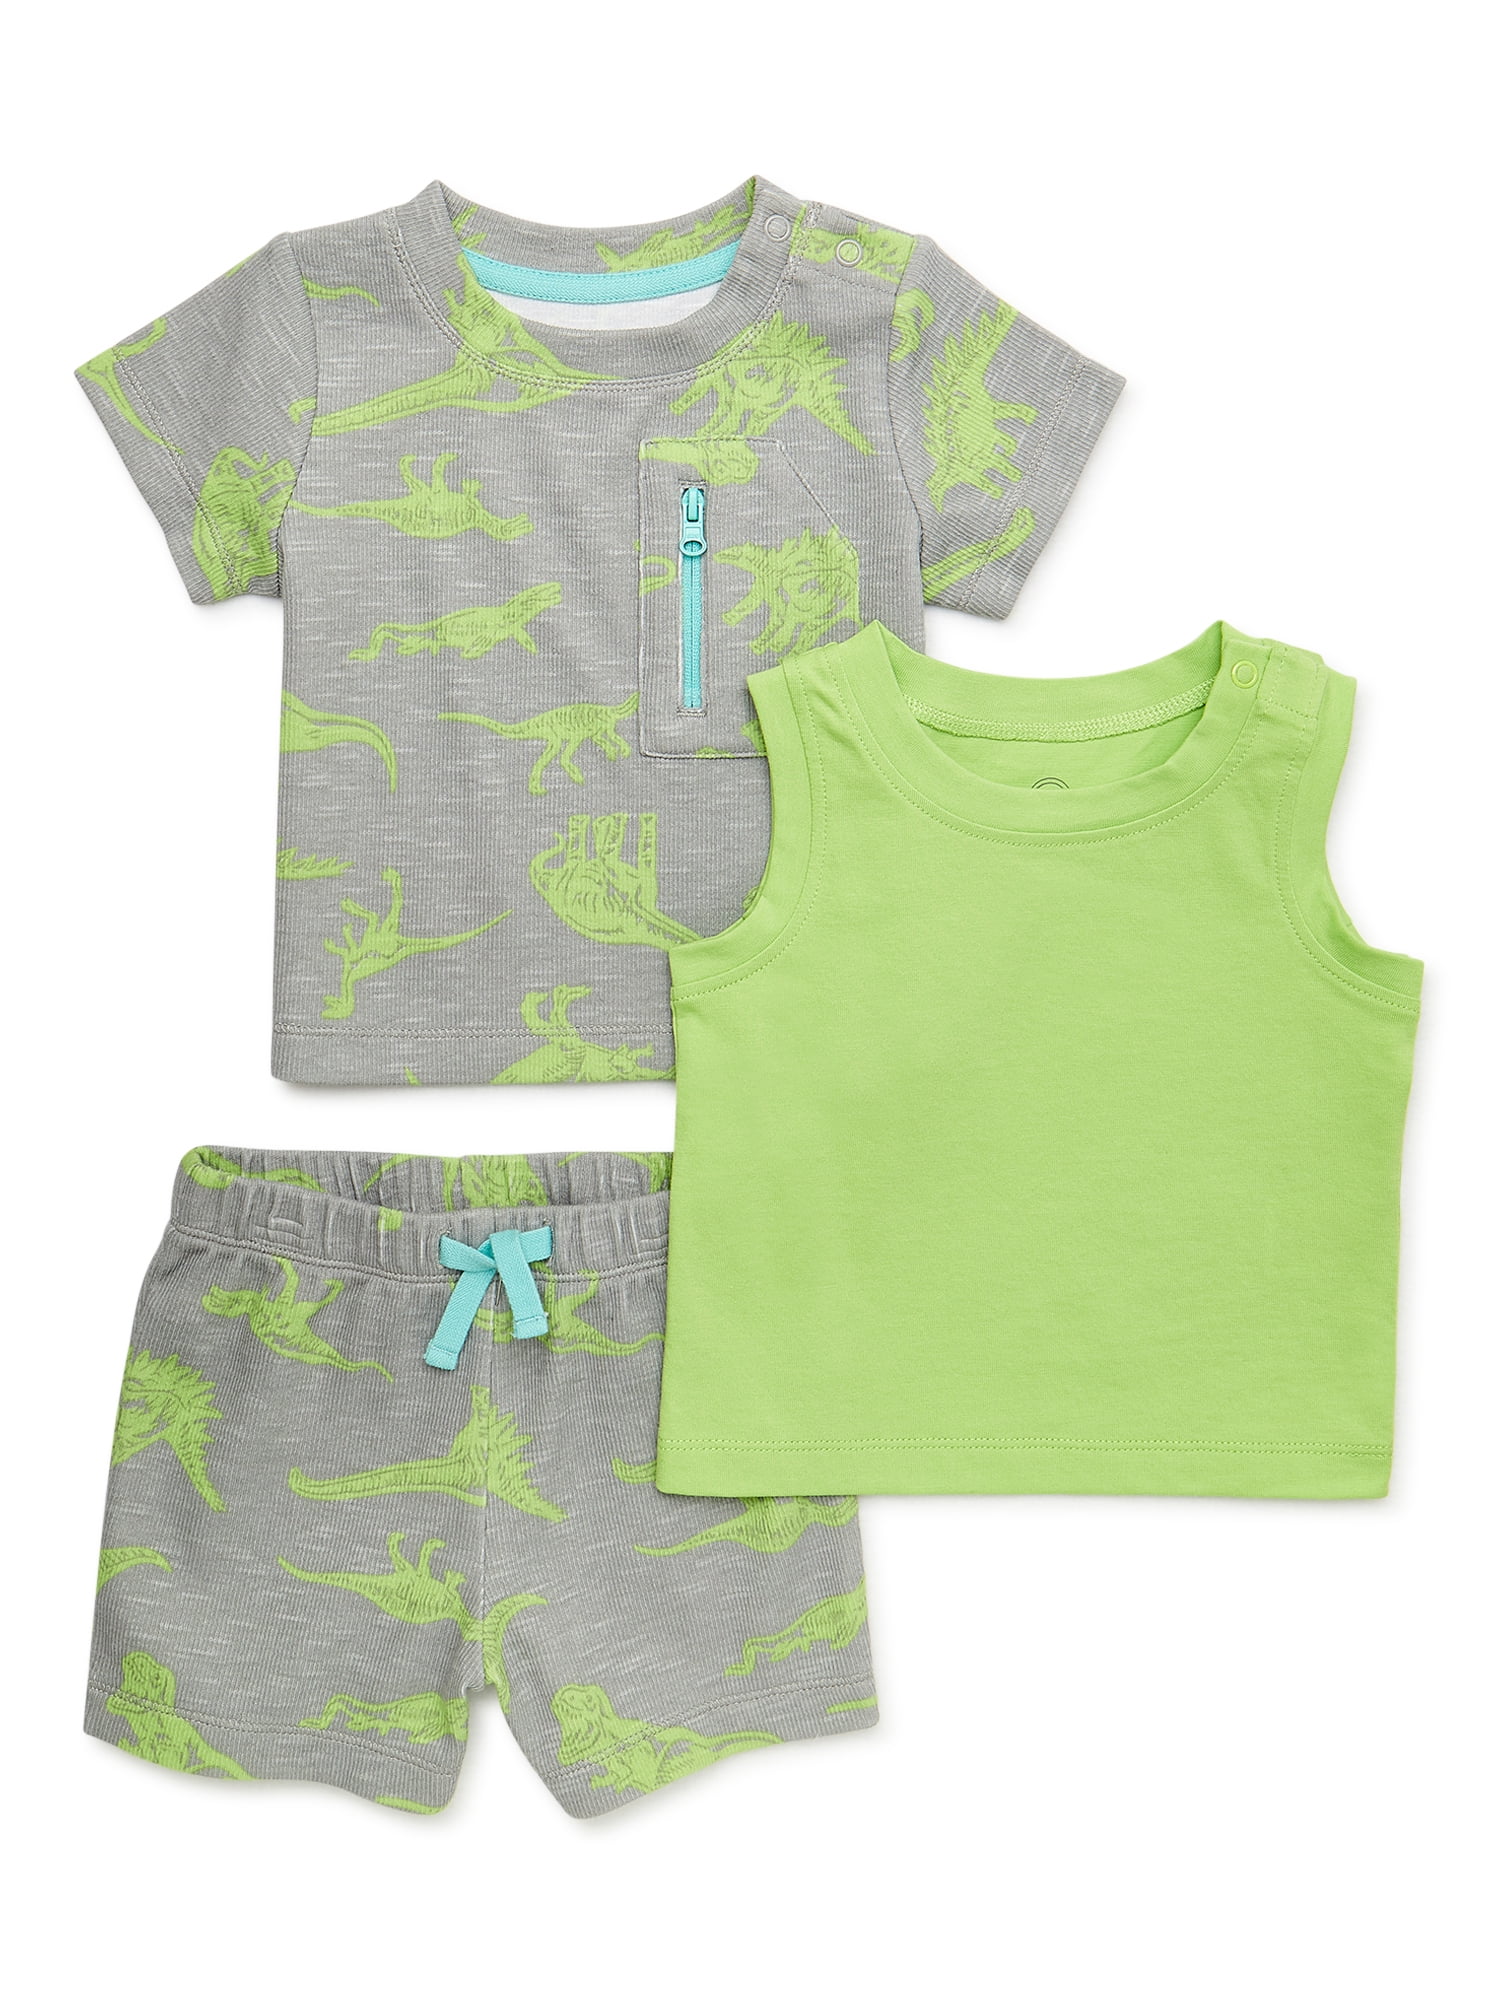 At håndtere foragte Intakt Wonder Nation Baby Boy T-Shirt, Tank Top and Shorts Set, 3-Piece, Sizes 0/3-24  Months - Walmart.com